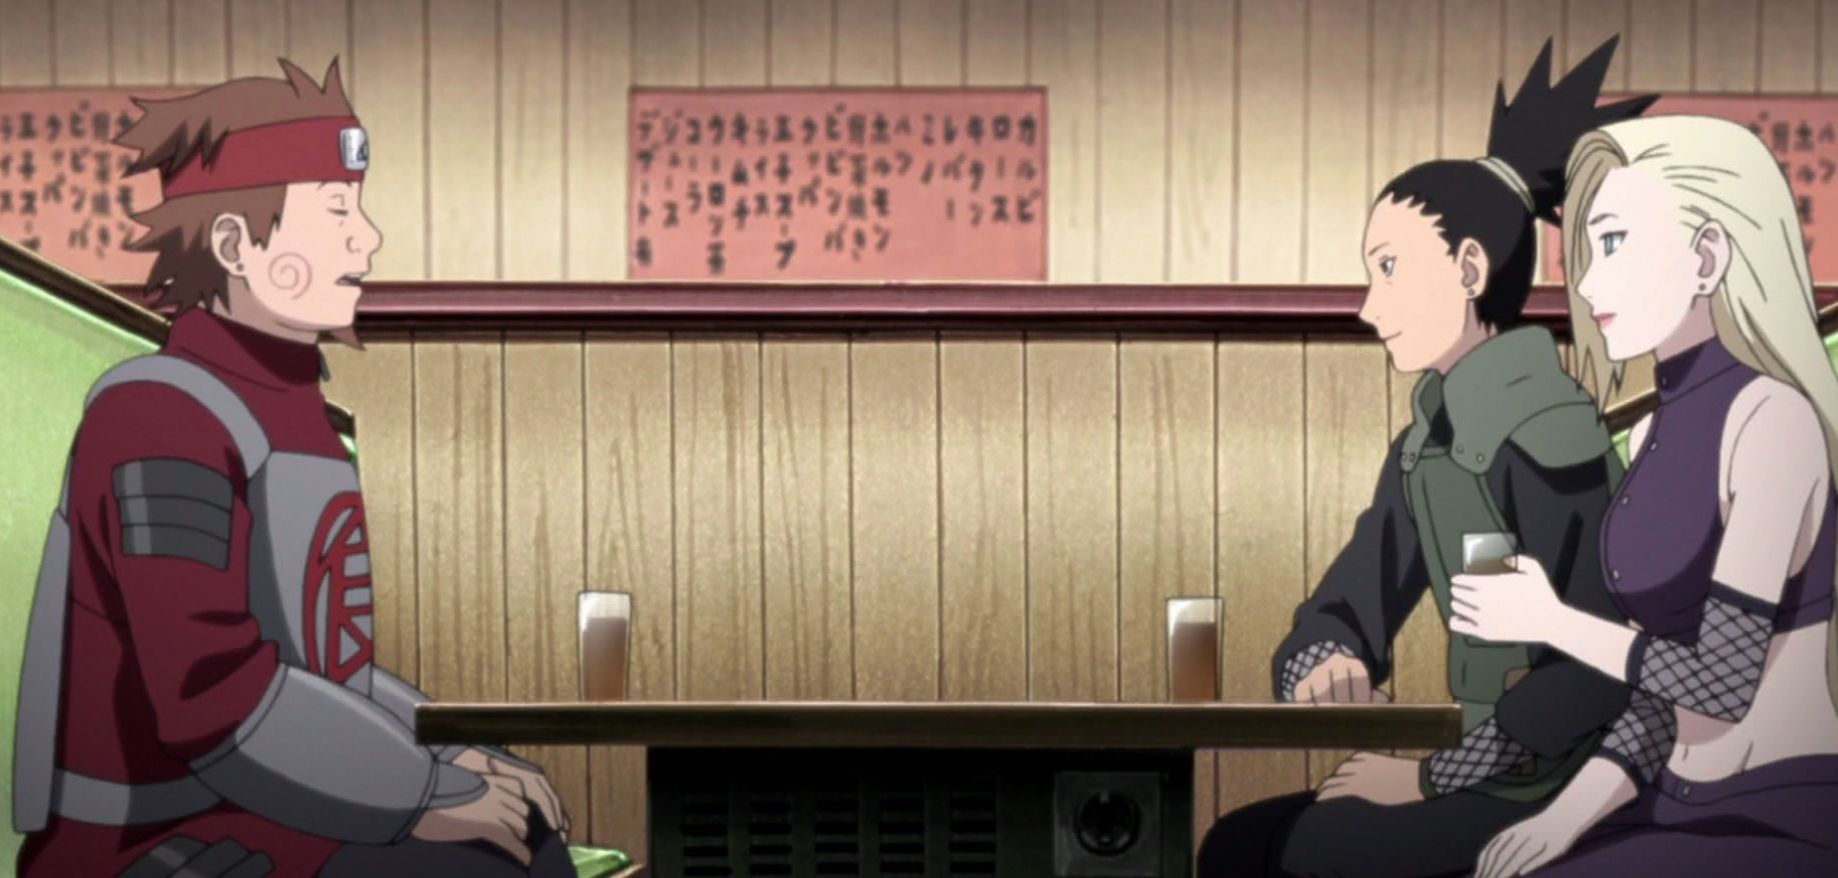 Choji, Shikamaru, and Ino sit together in a restaurant in Naruto: Shippuden